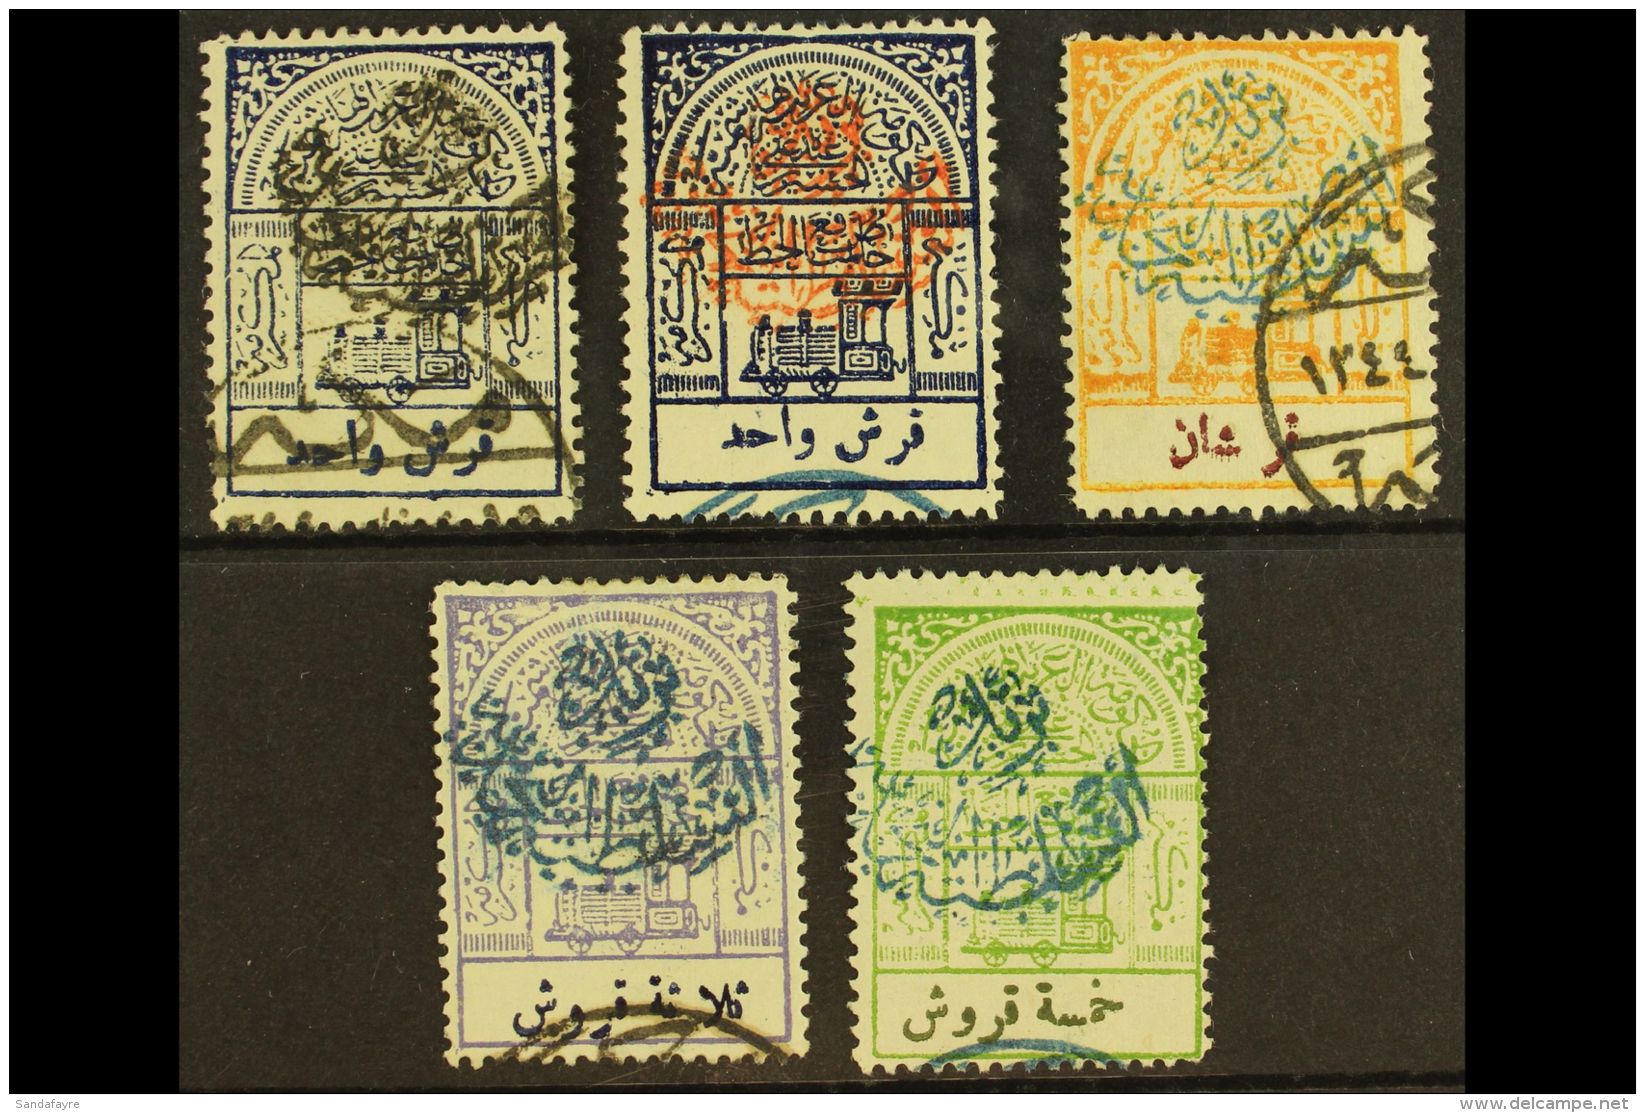 NEJDI OCCUPATION OF HEJAZ 1925 "Nejd Sultanate Post" Overprints On Hejaz Railway Tax Stamps Complete Set Inc Both... - Saudi-Arabien